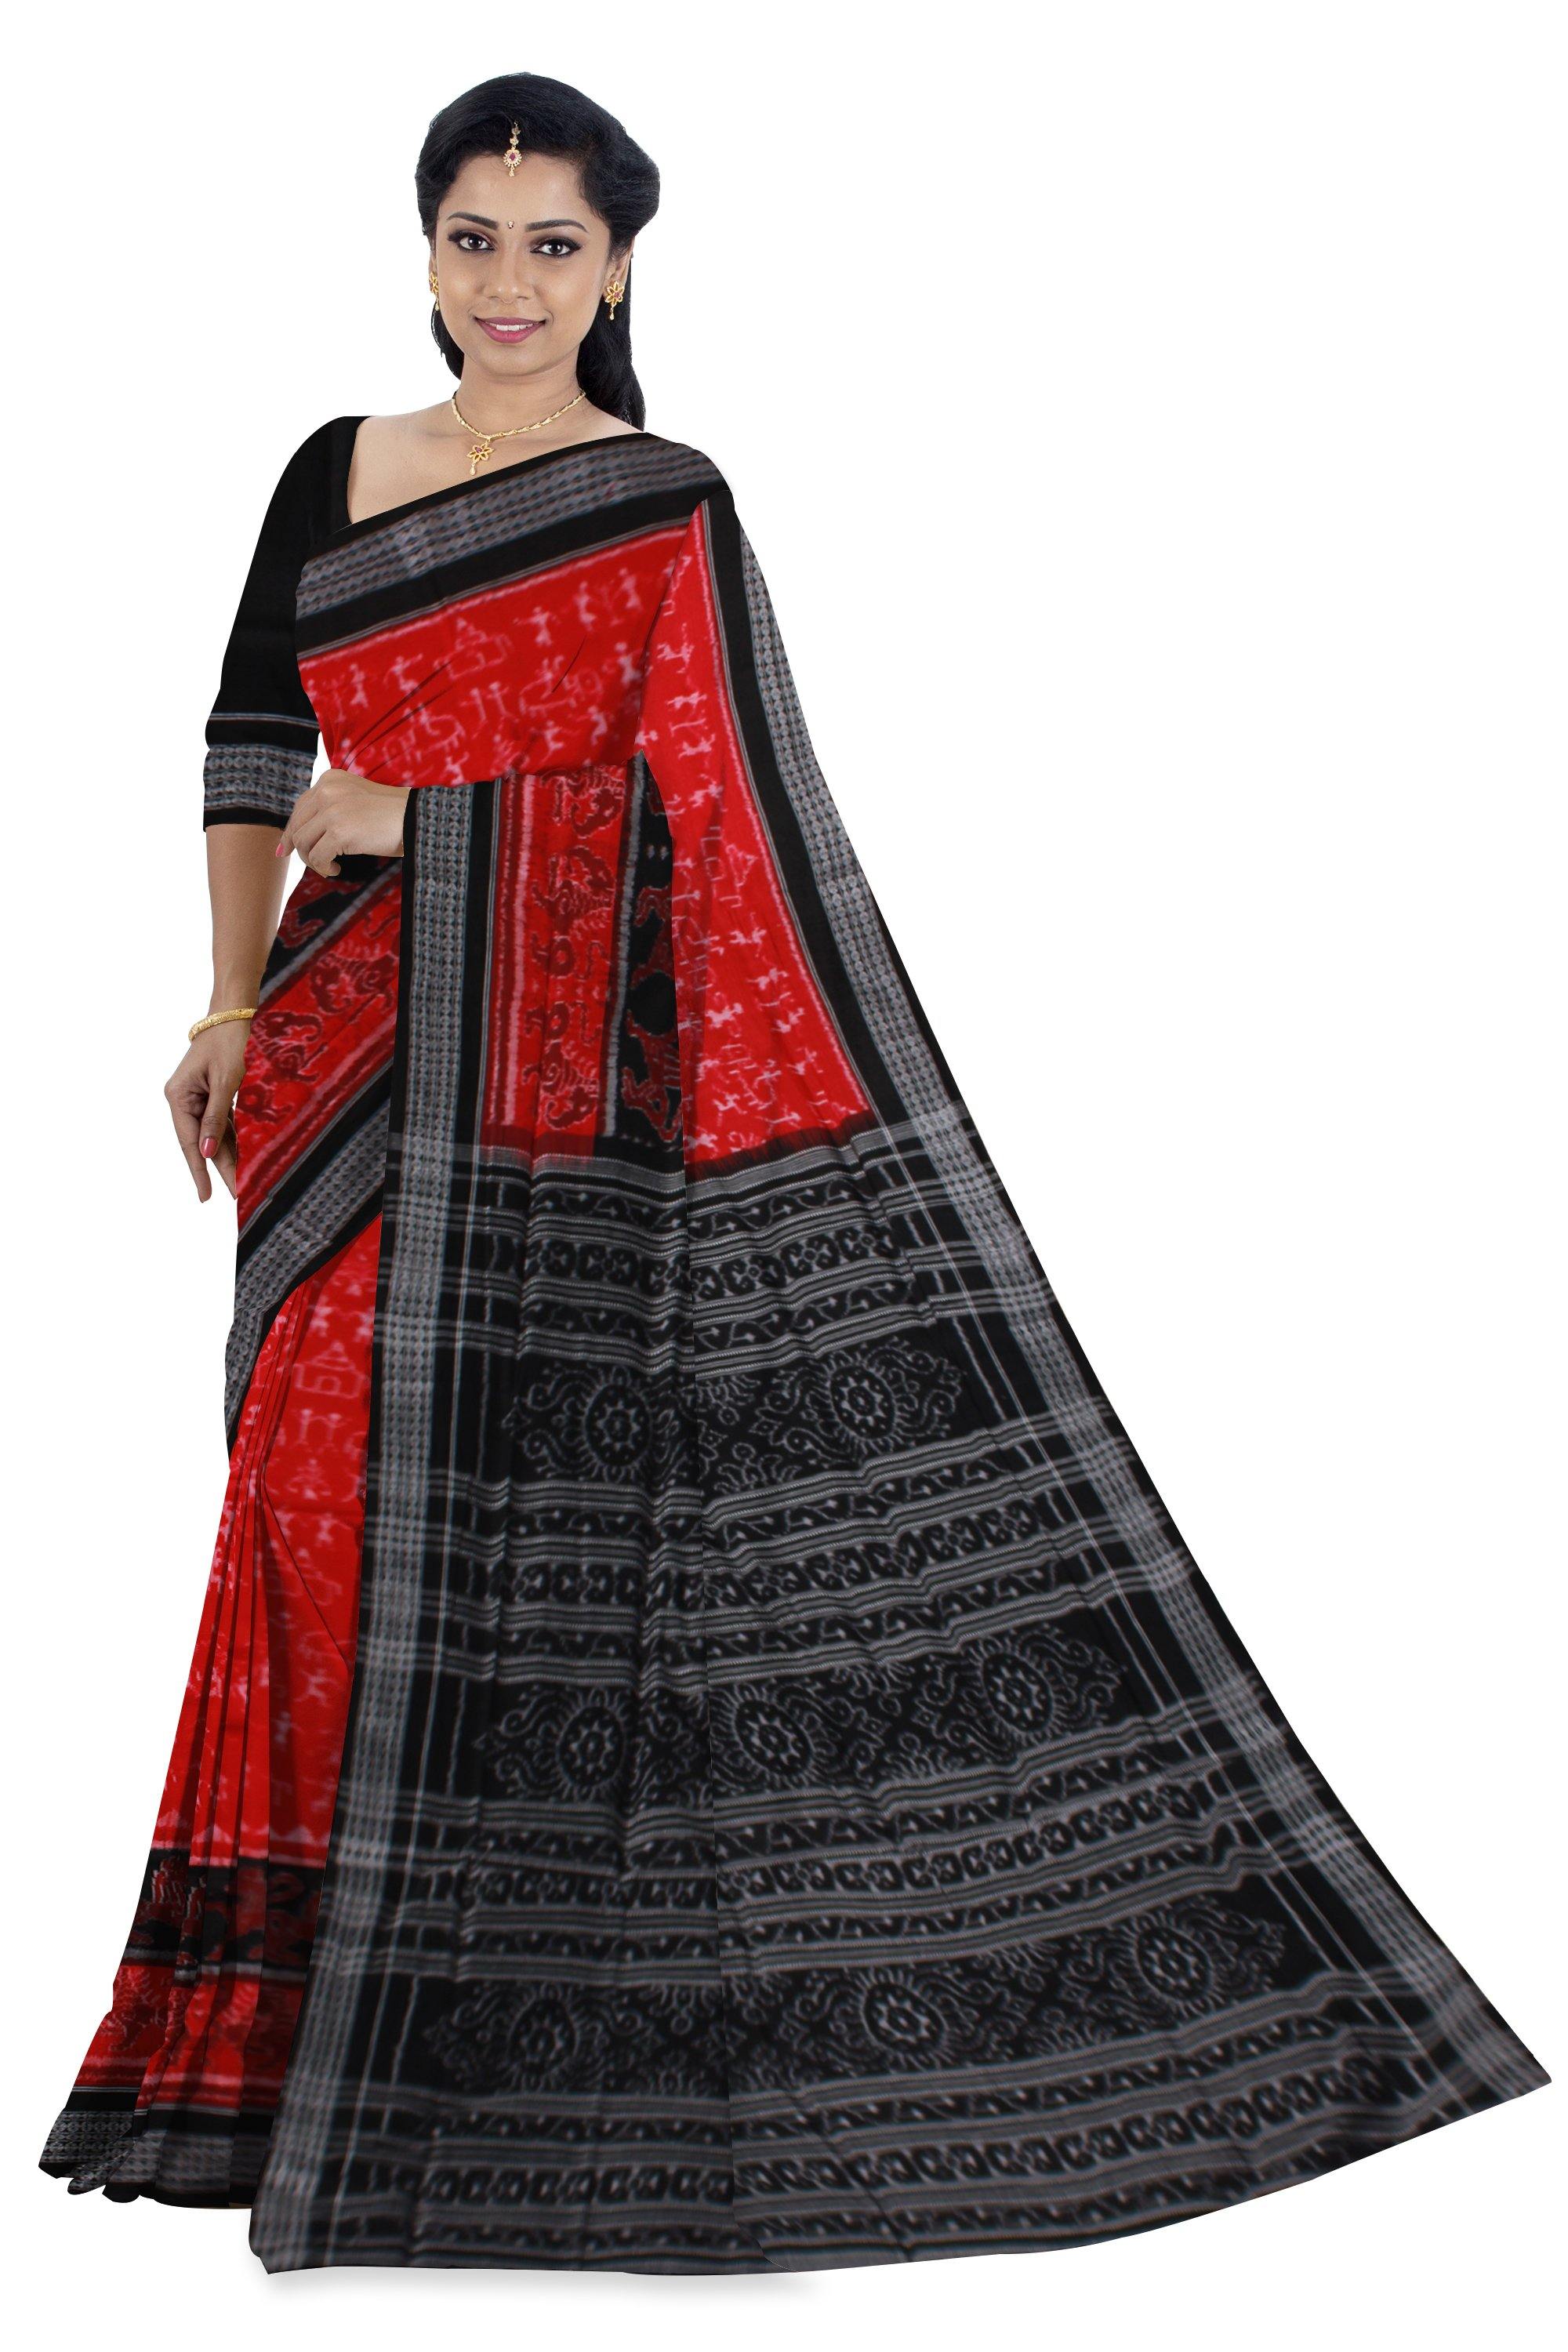 Tribal Dance Pattern Paper Bandha Cotton Saree in Red Colour - Koshali Arts & Crafts Enterprise